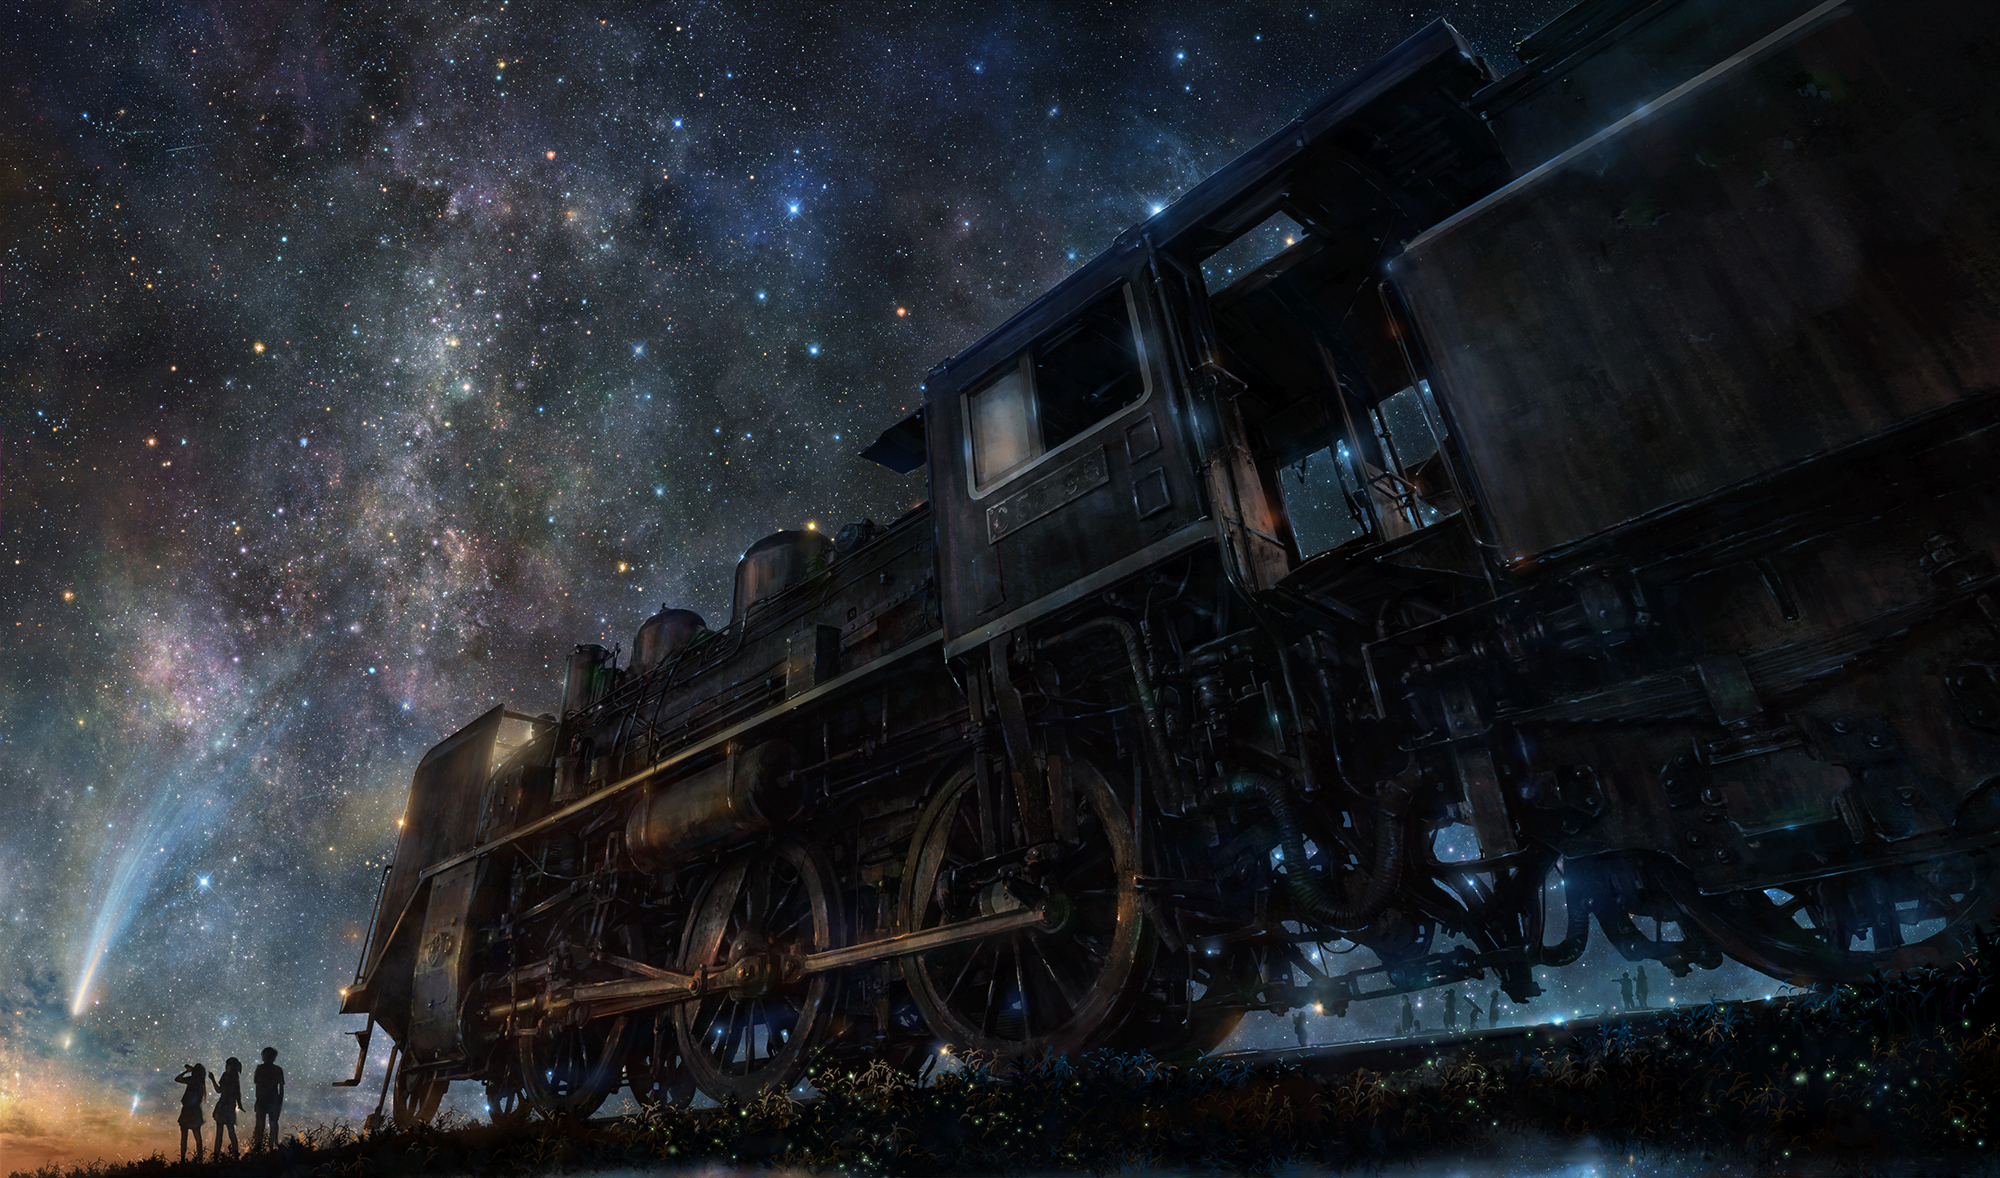 Anime 2000x1178 train artwork stars railway sky group of people digital art fantasy art space anime night starry night